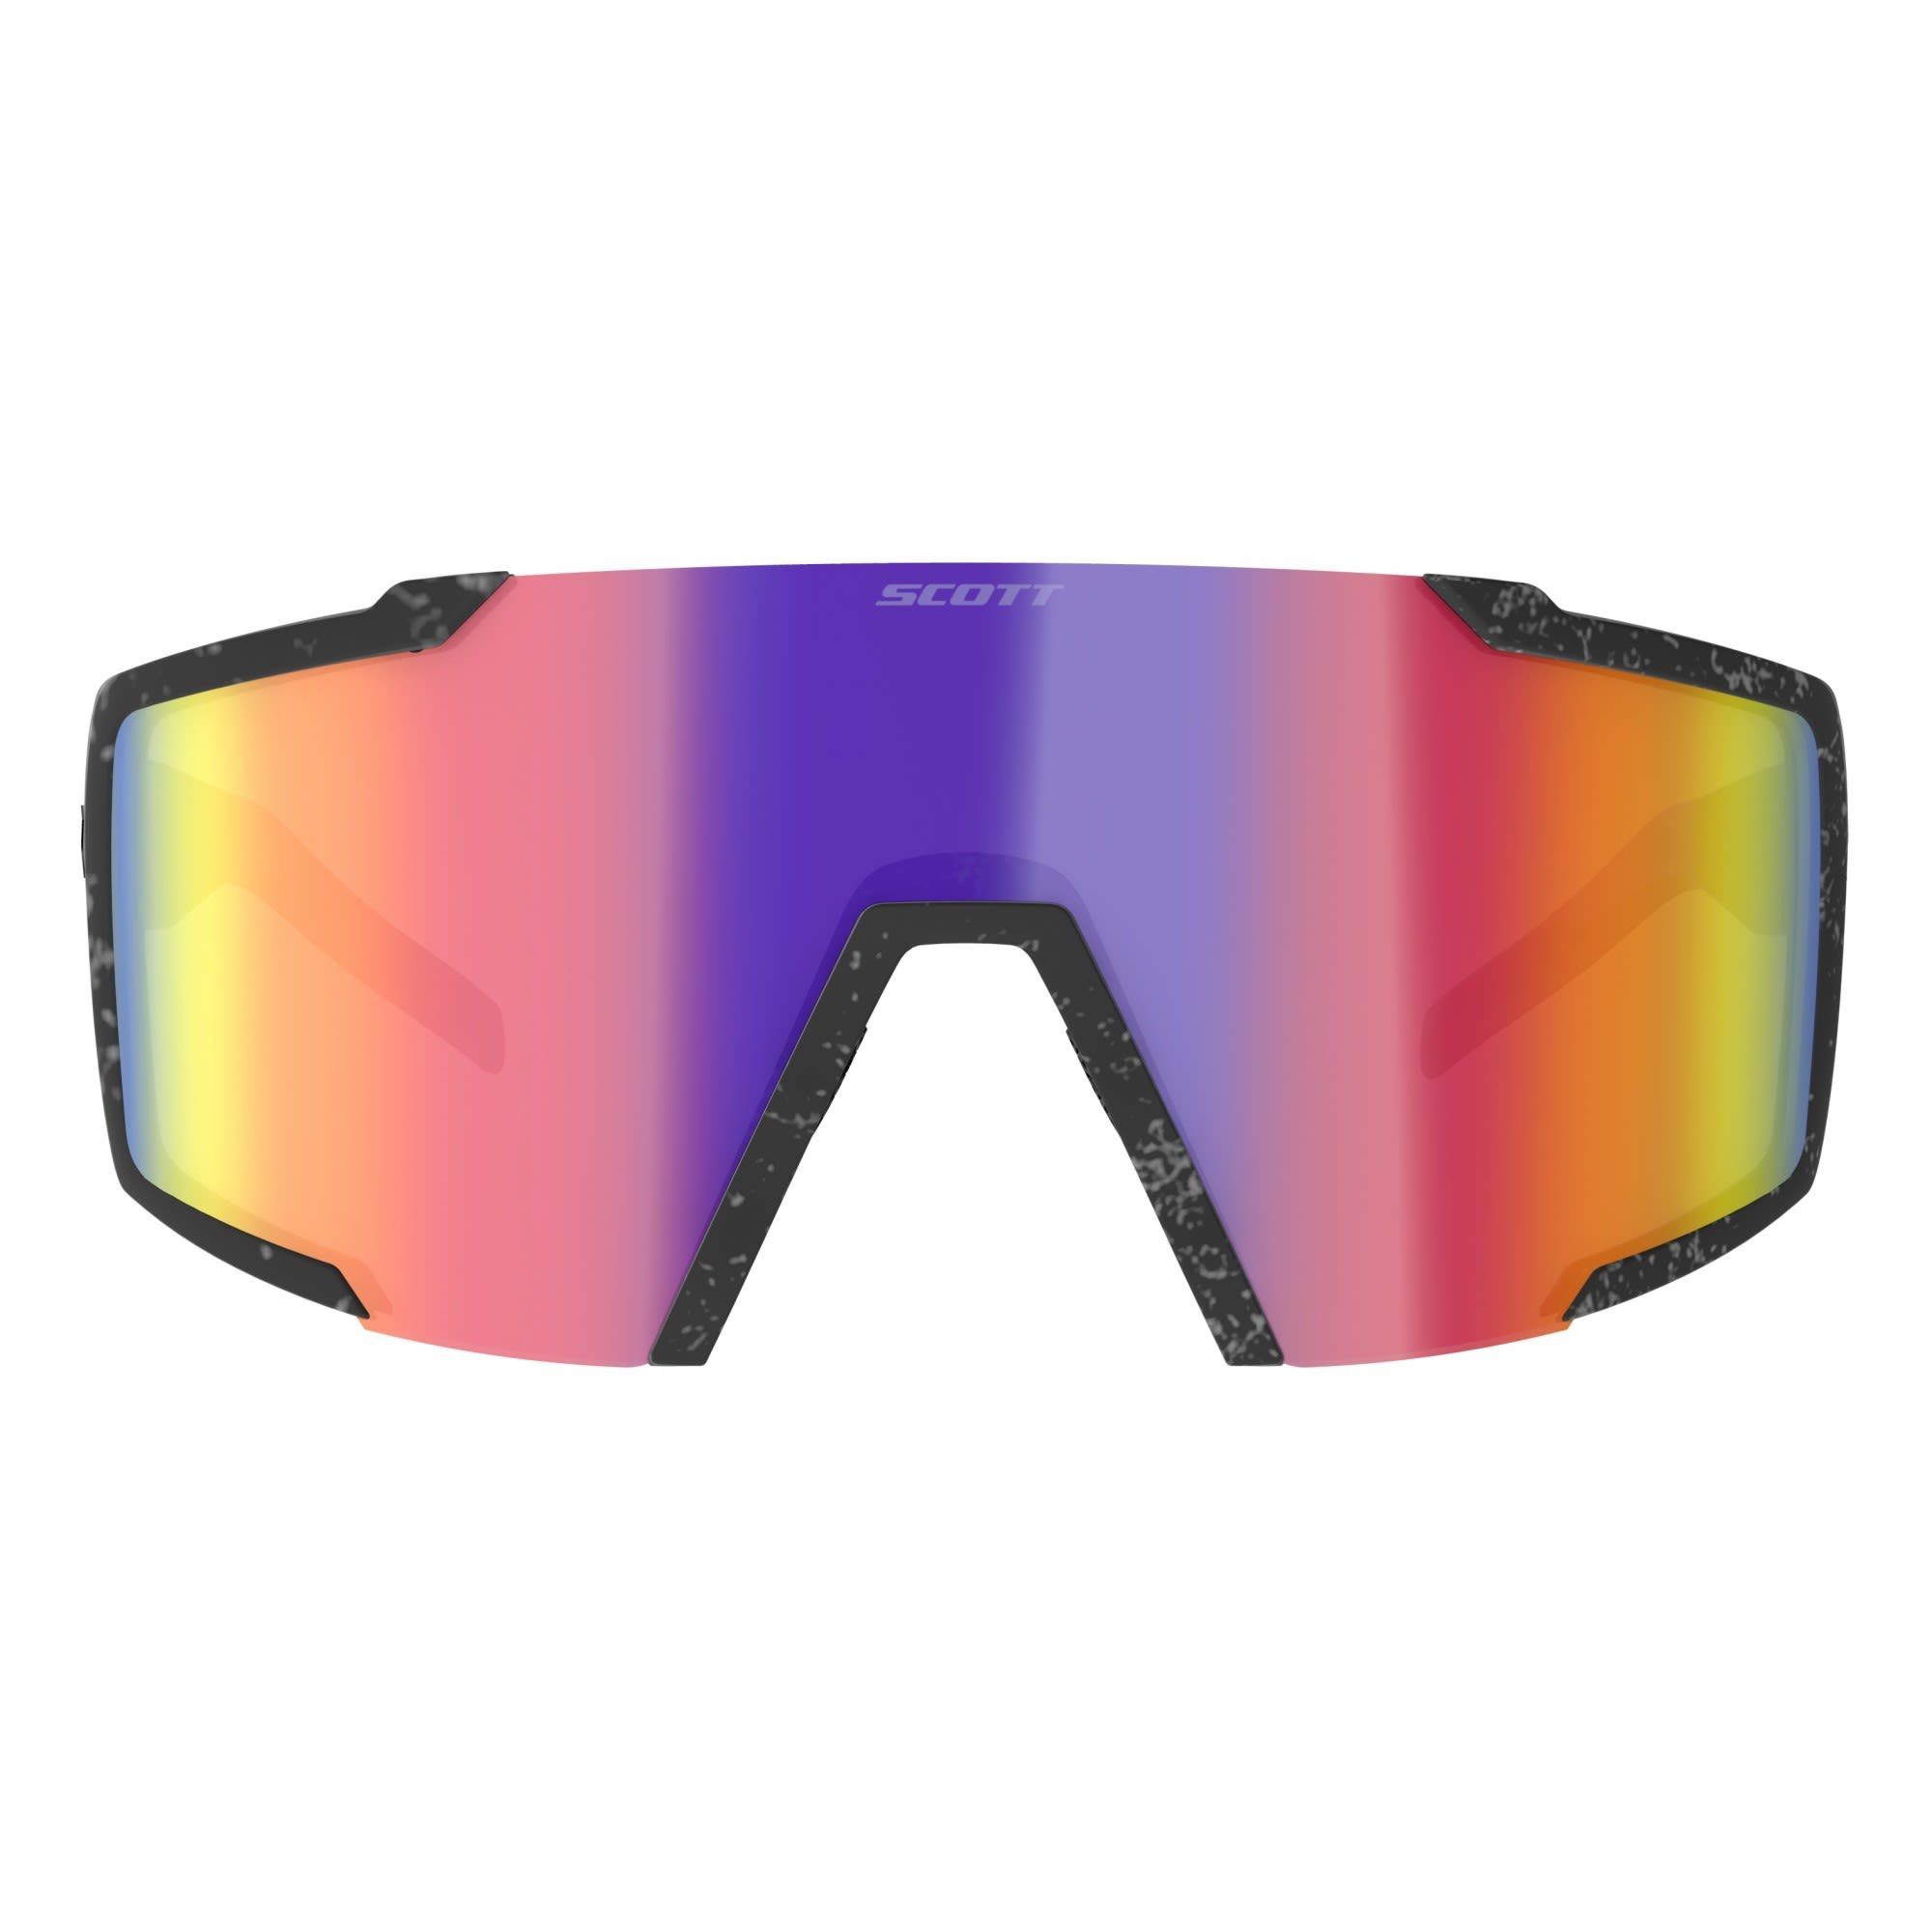 Scott Fahrradbrille Scott Shield Marble Teal Sunglasses Compact - Accessoires Chrome Black